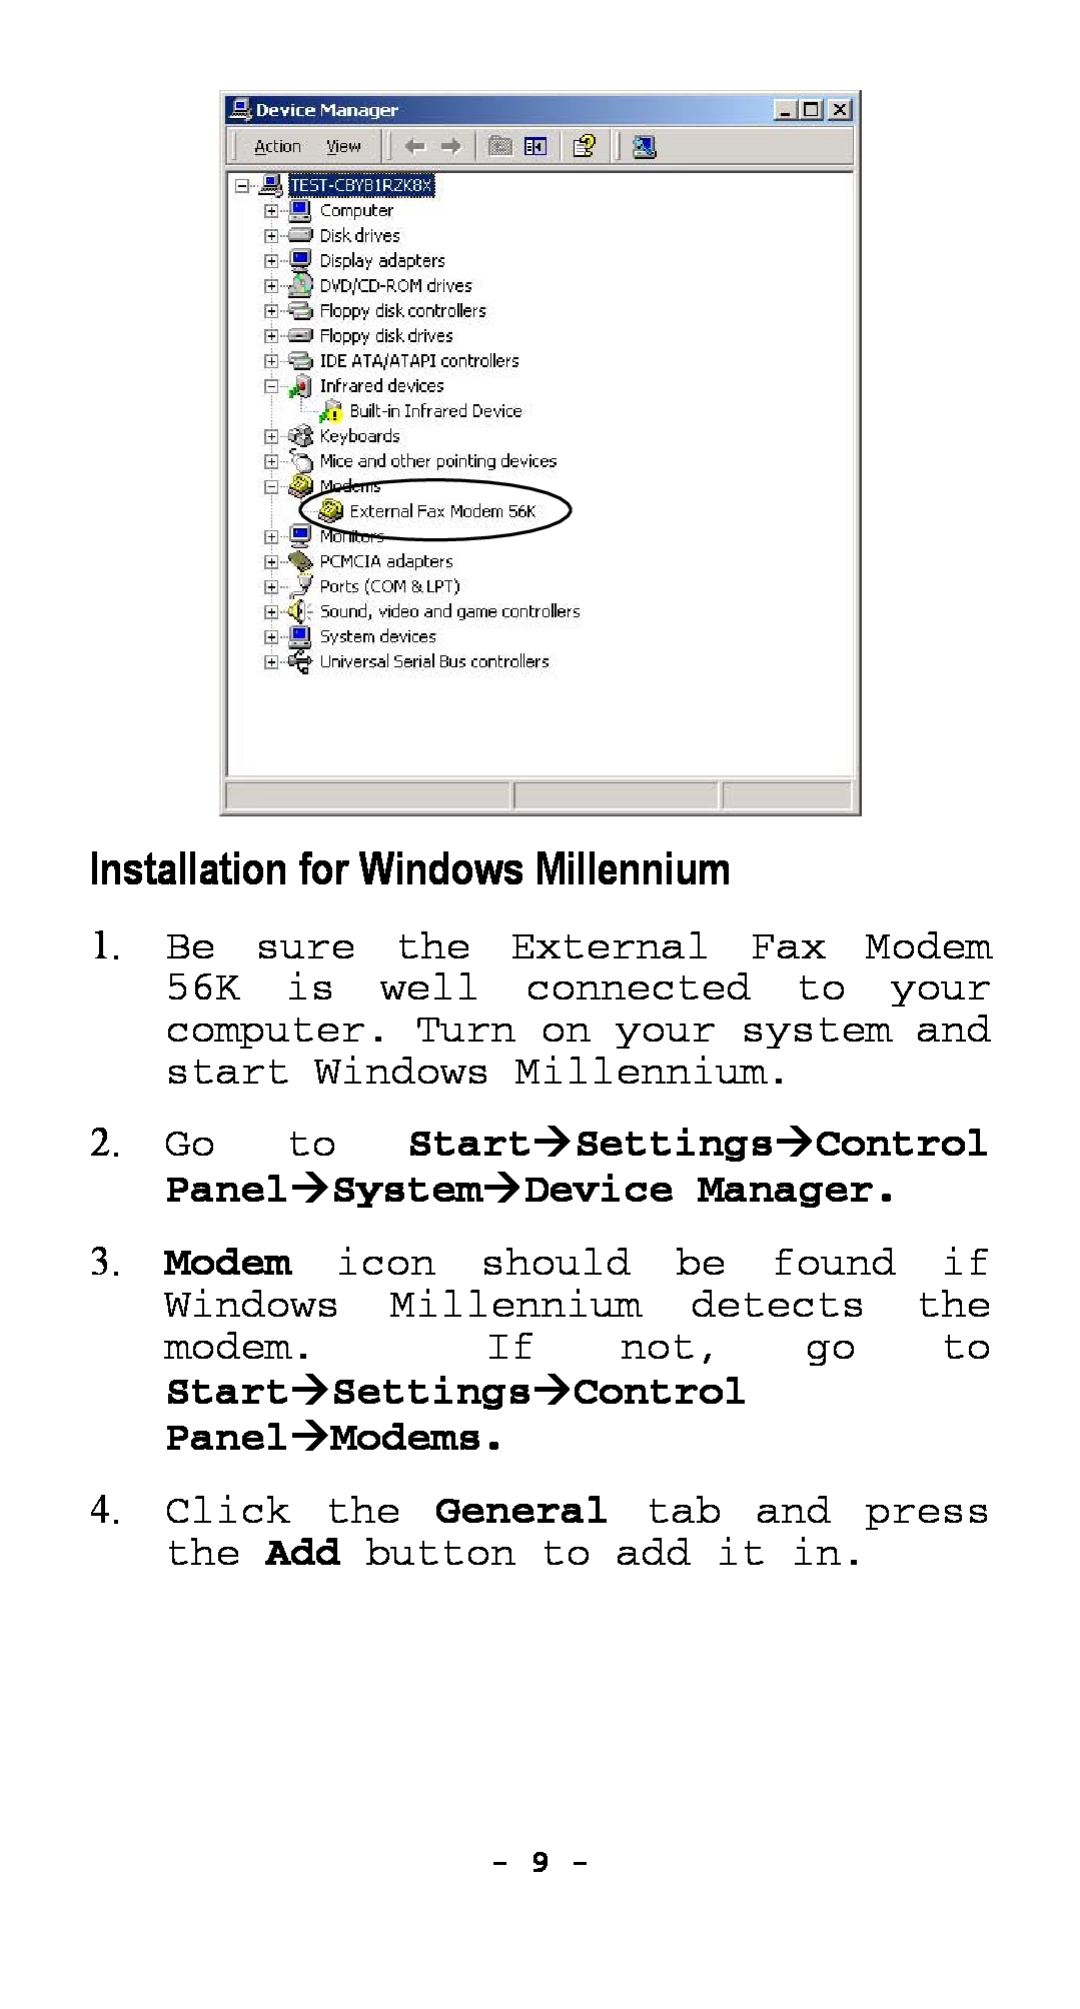 Abocom EFM560 manual Installation for Windows Millennium, Go to StartÆSettingsÆControl PanelÆSystemÆDevice Manager 